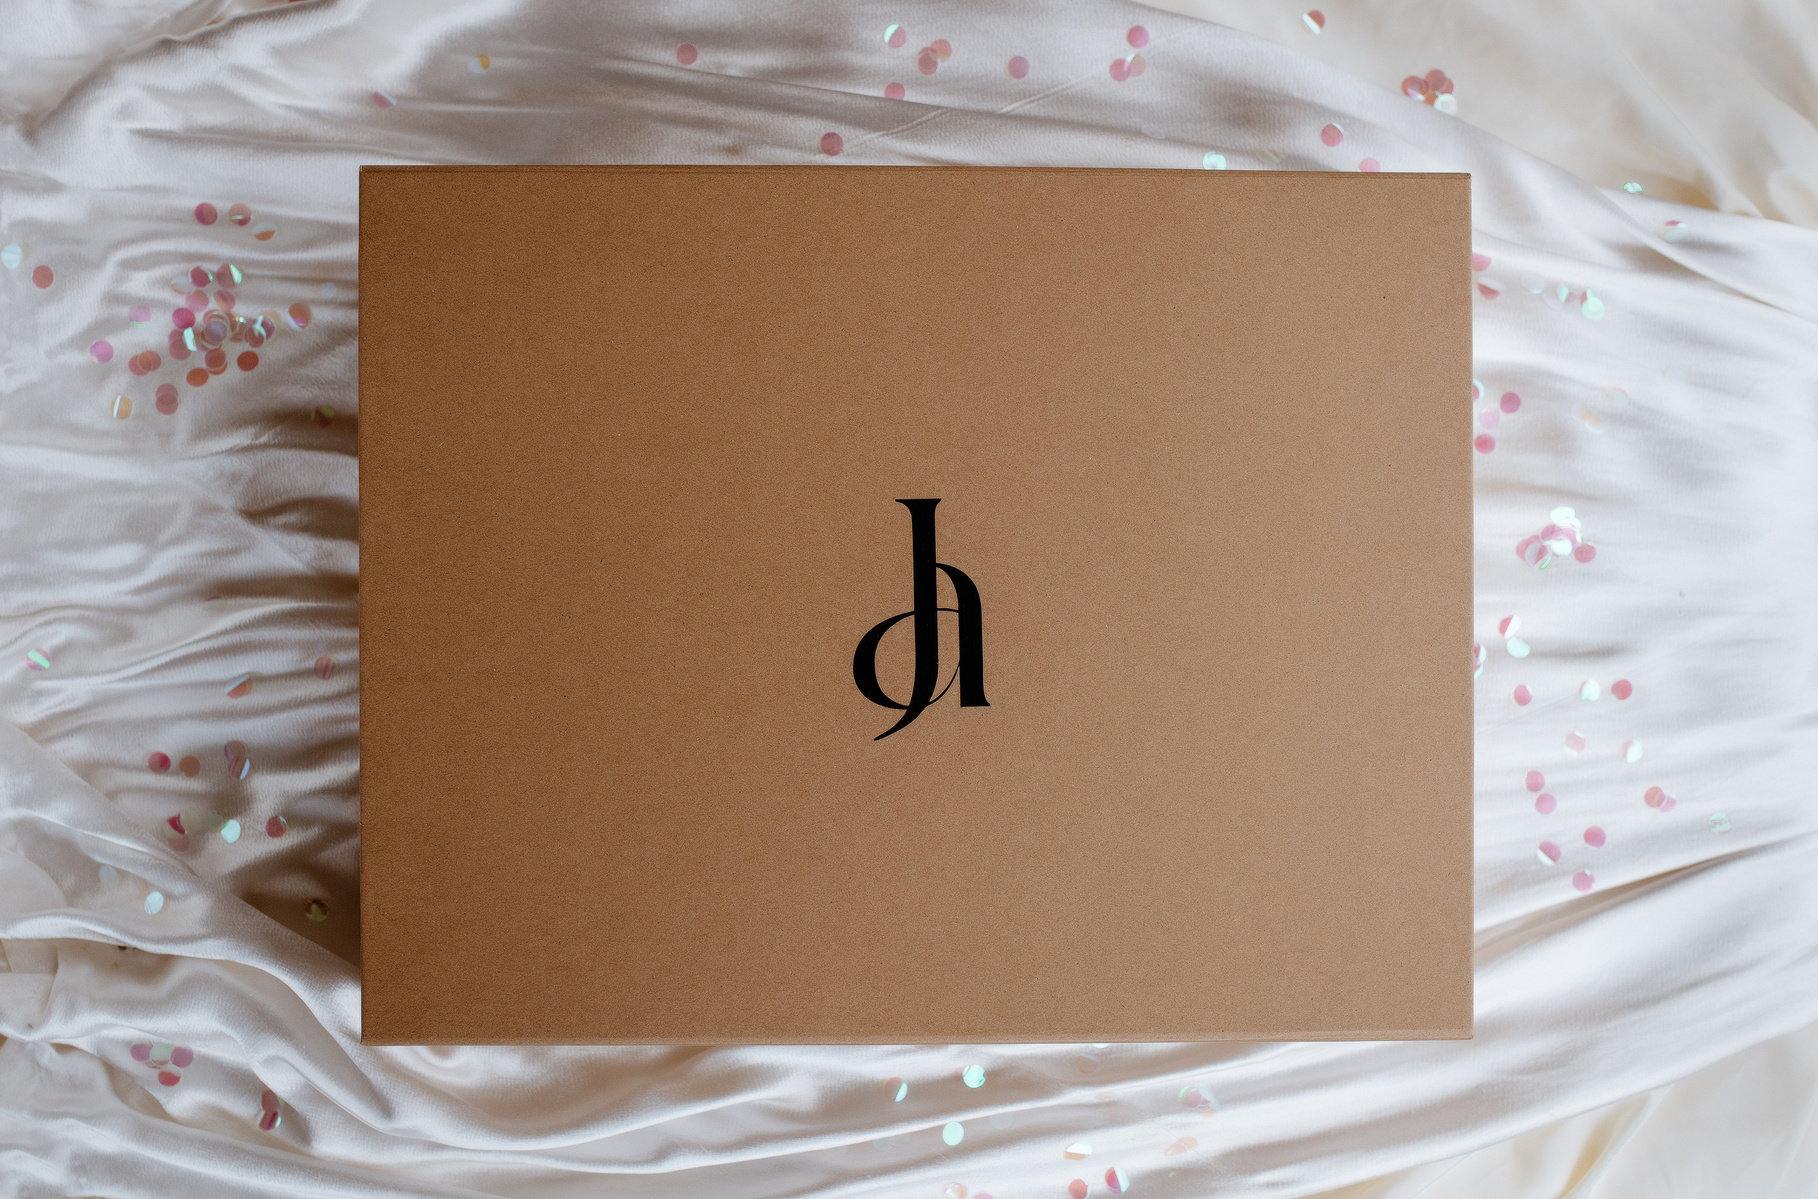 cardboard box with JA logo on it